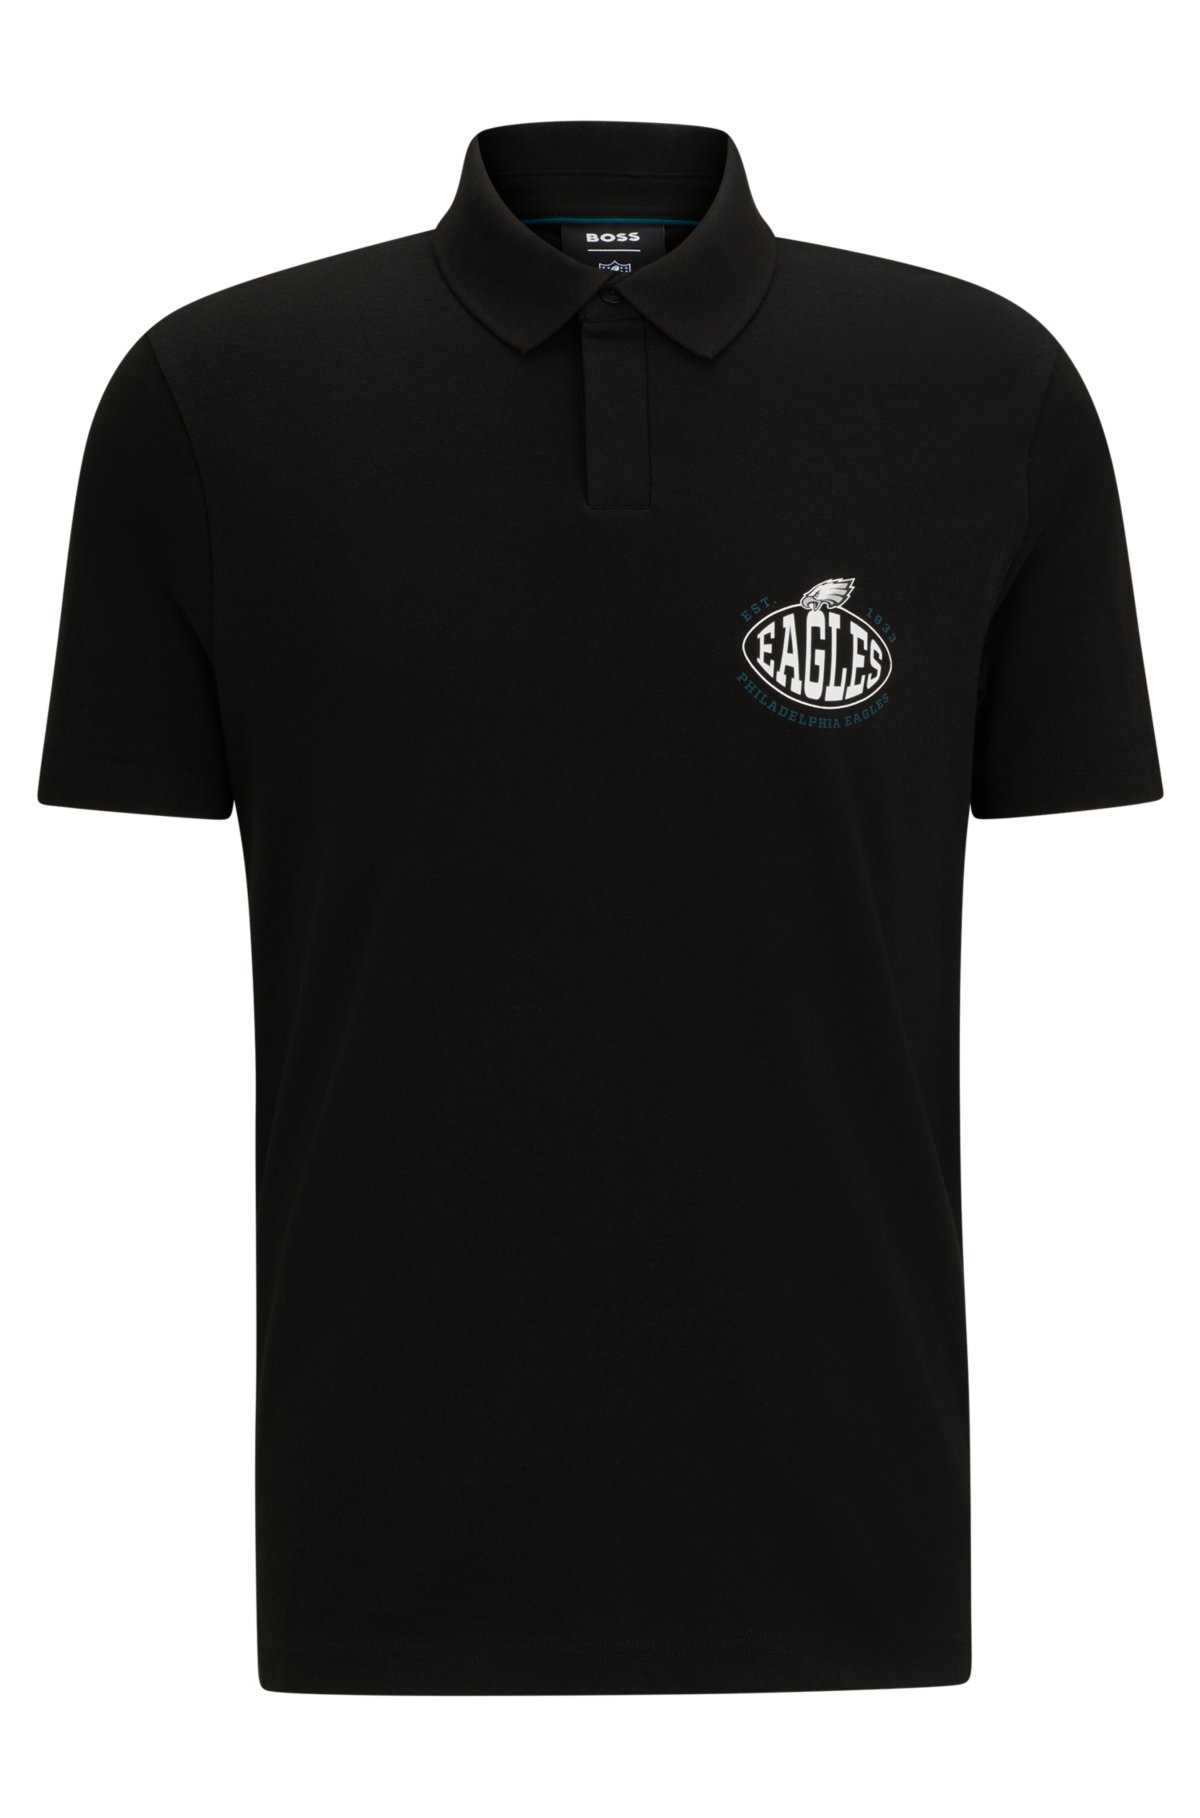 BOSS x NFL cotton-piqué polo shirt with collaborative branding, Eagles